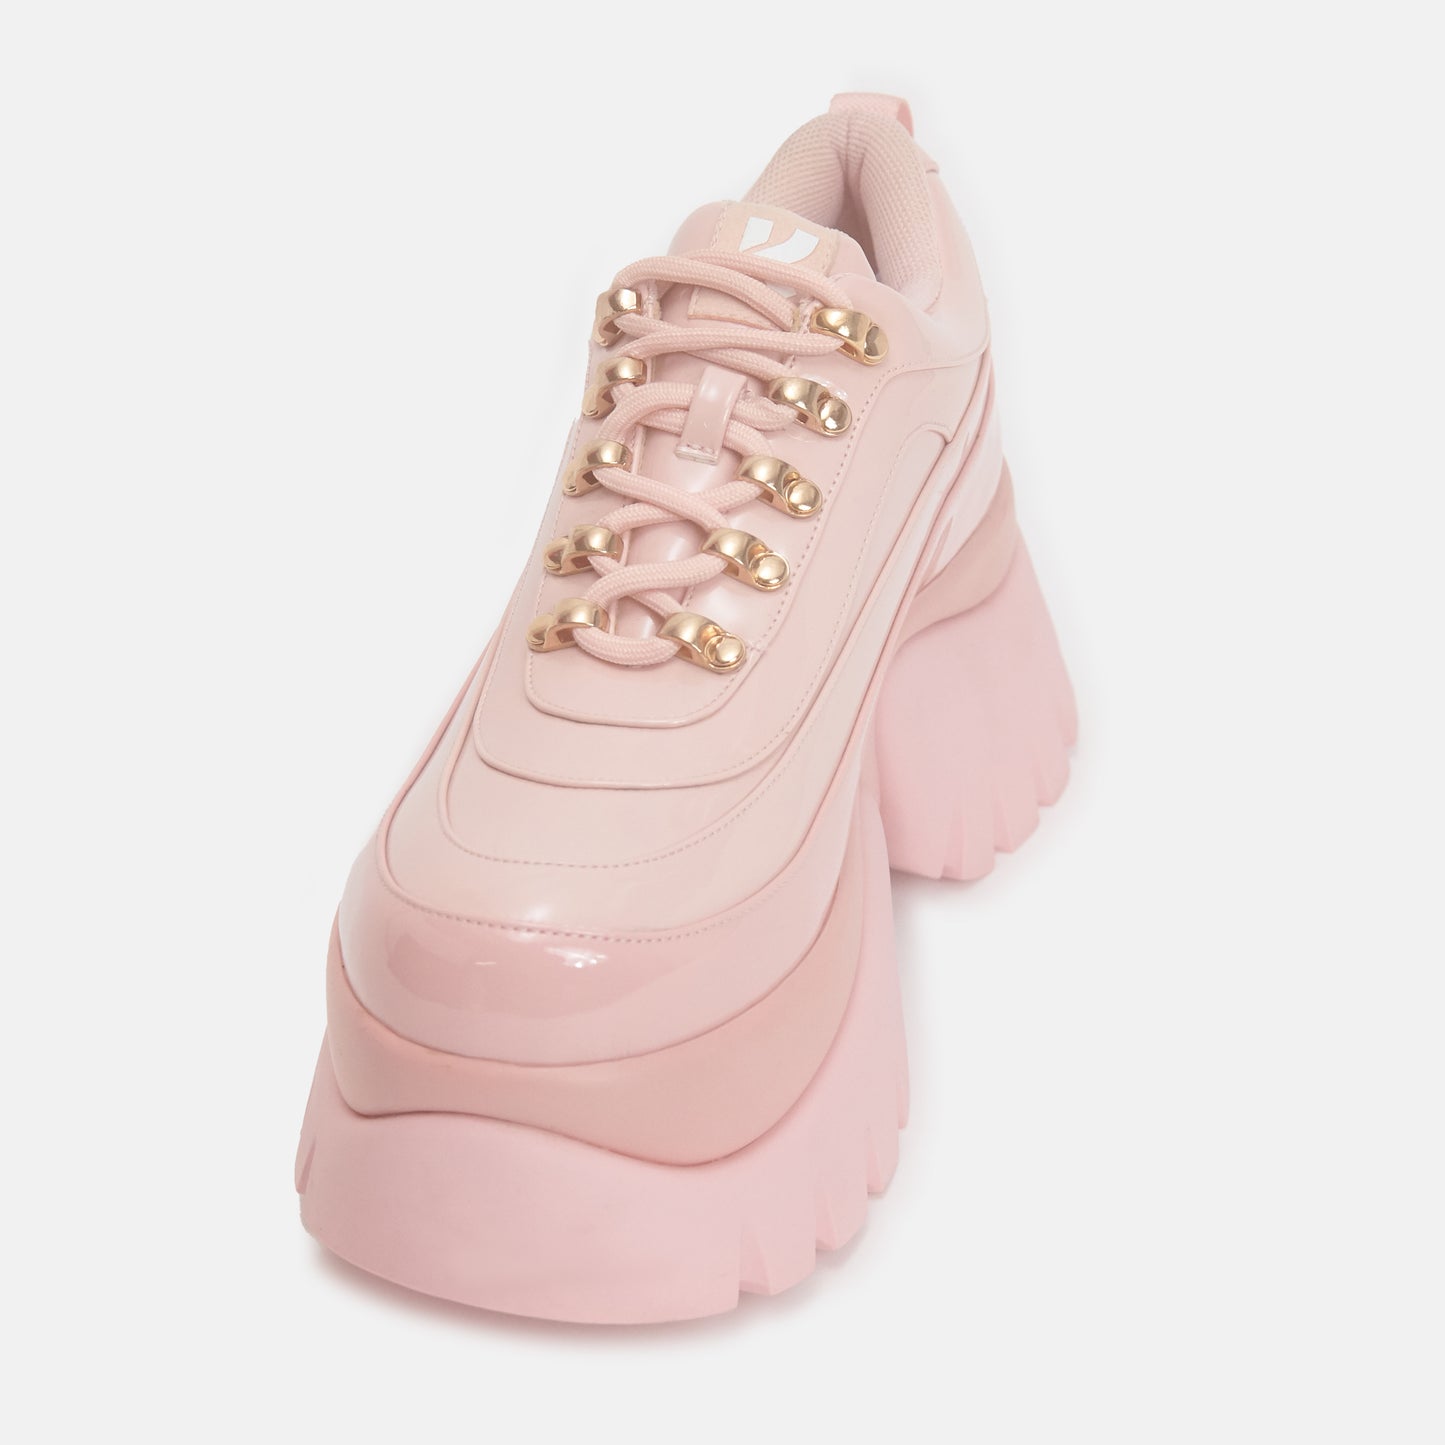 Cake Show Ballerina Platform Shoes - Shoes - KOI Footwear - Pink - Front Detail